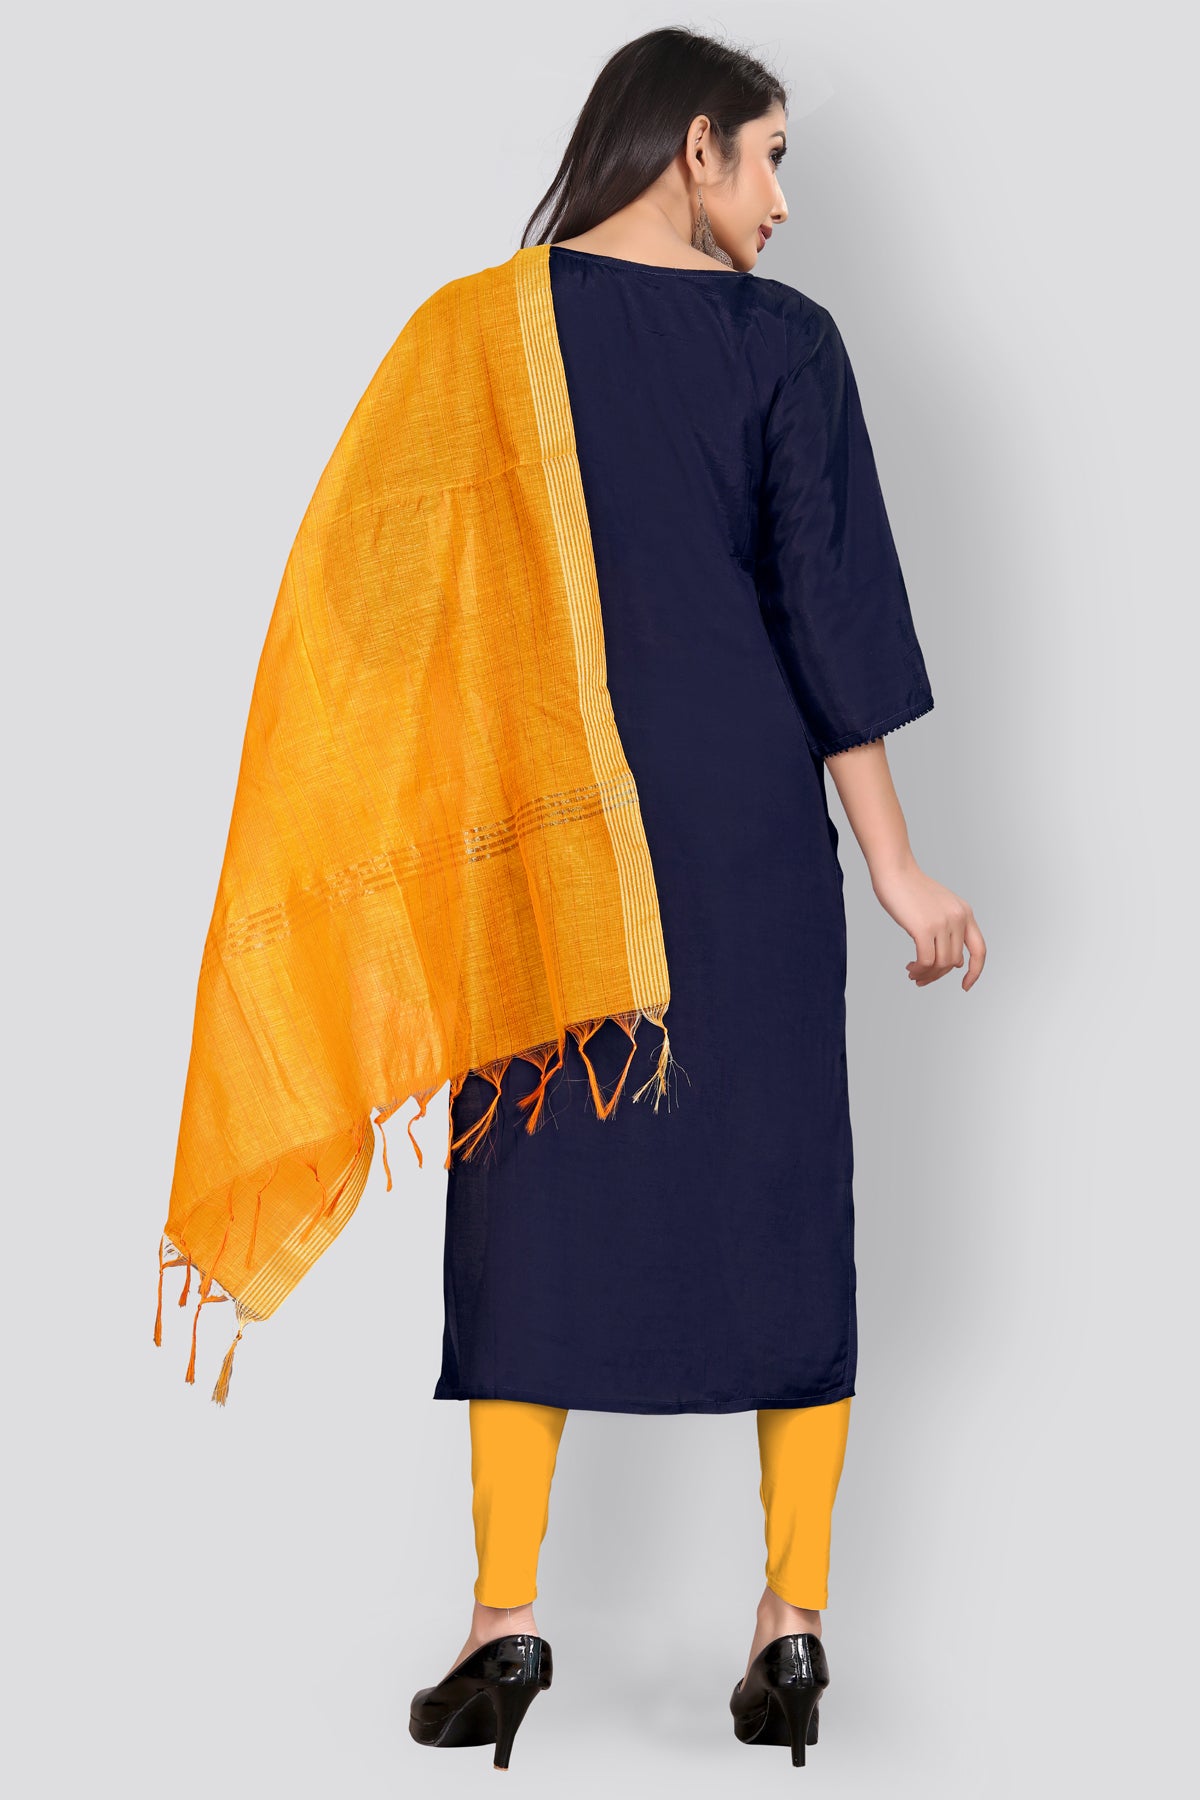 Buy Designer kurti with silk Dupatta